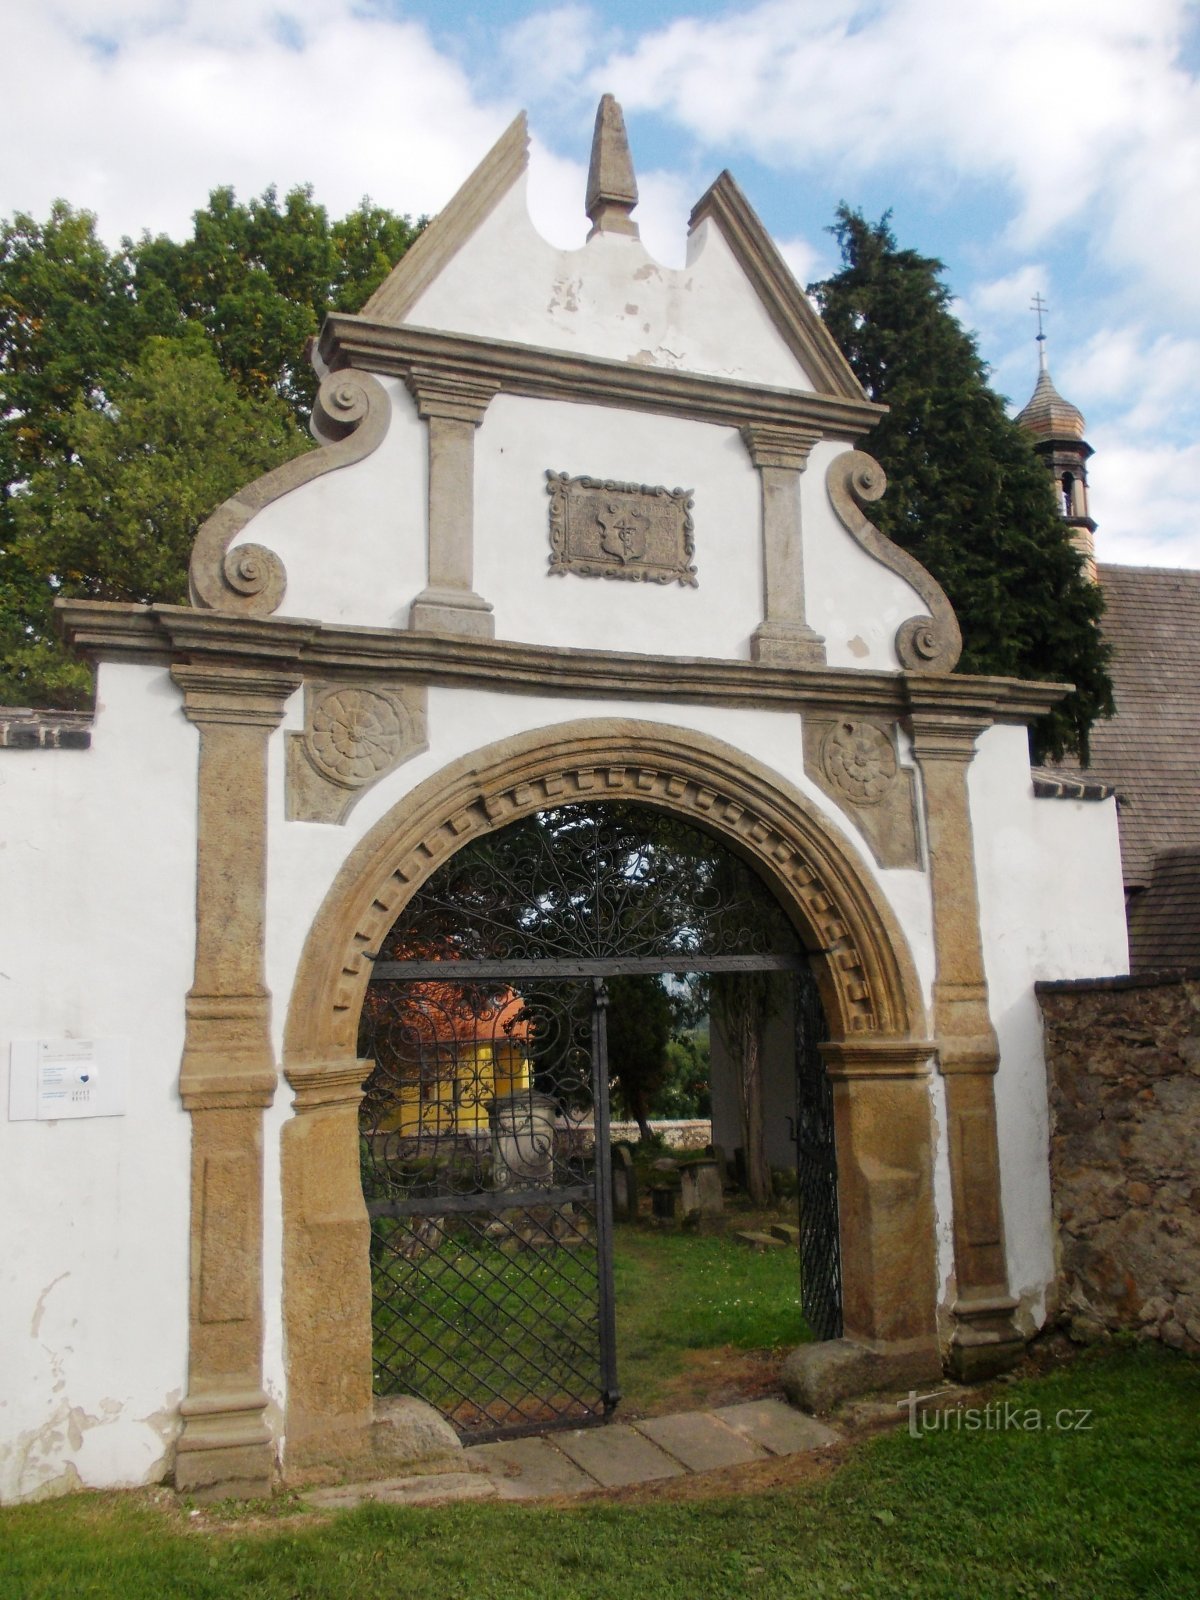 Renaissance gate from 1615